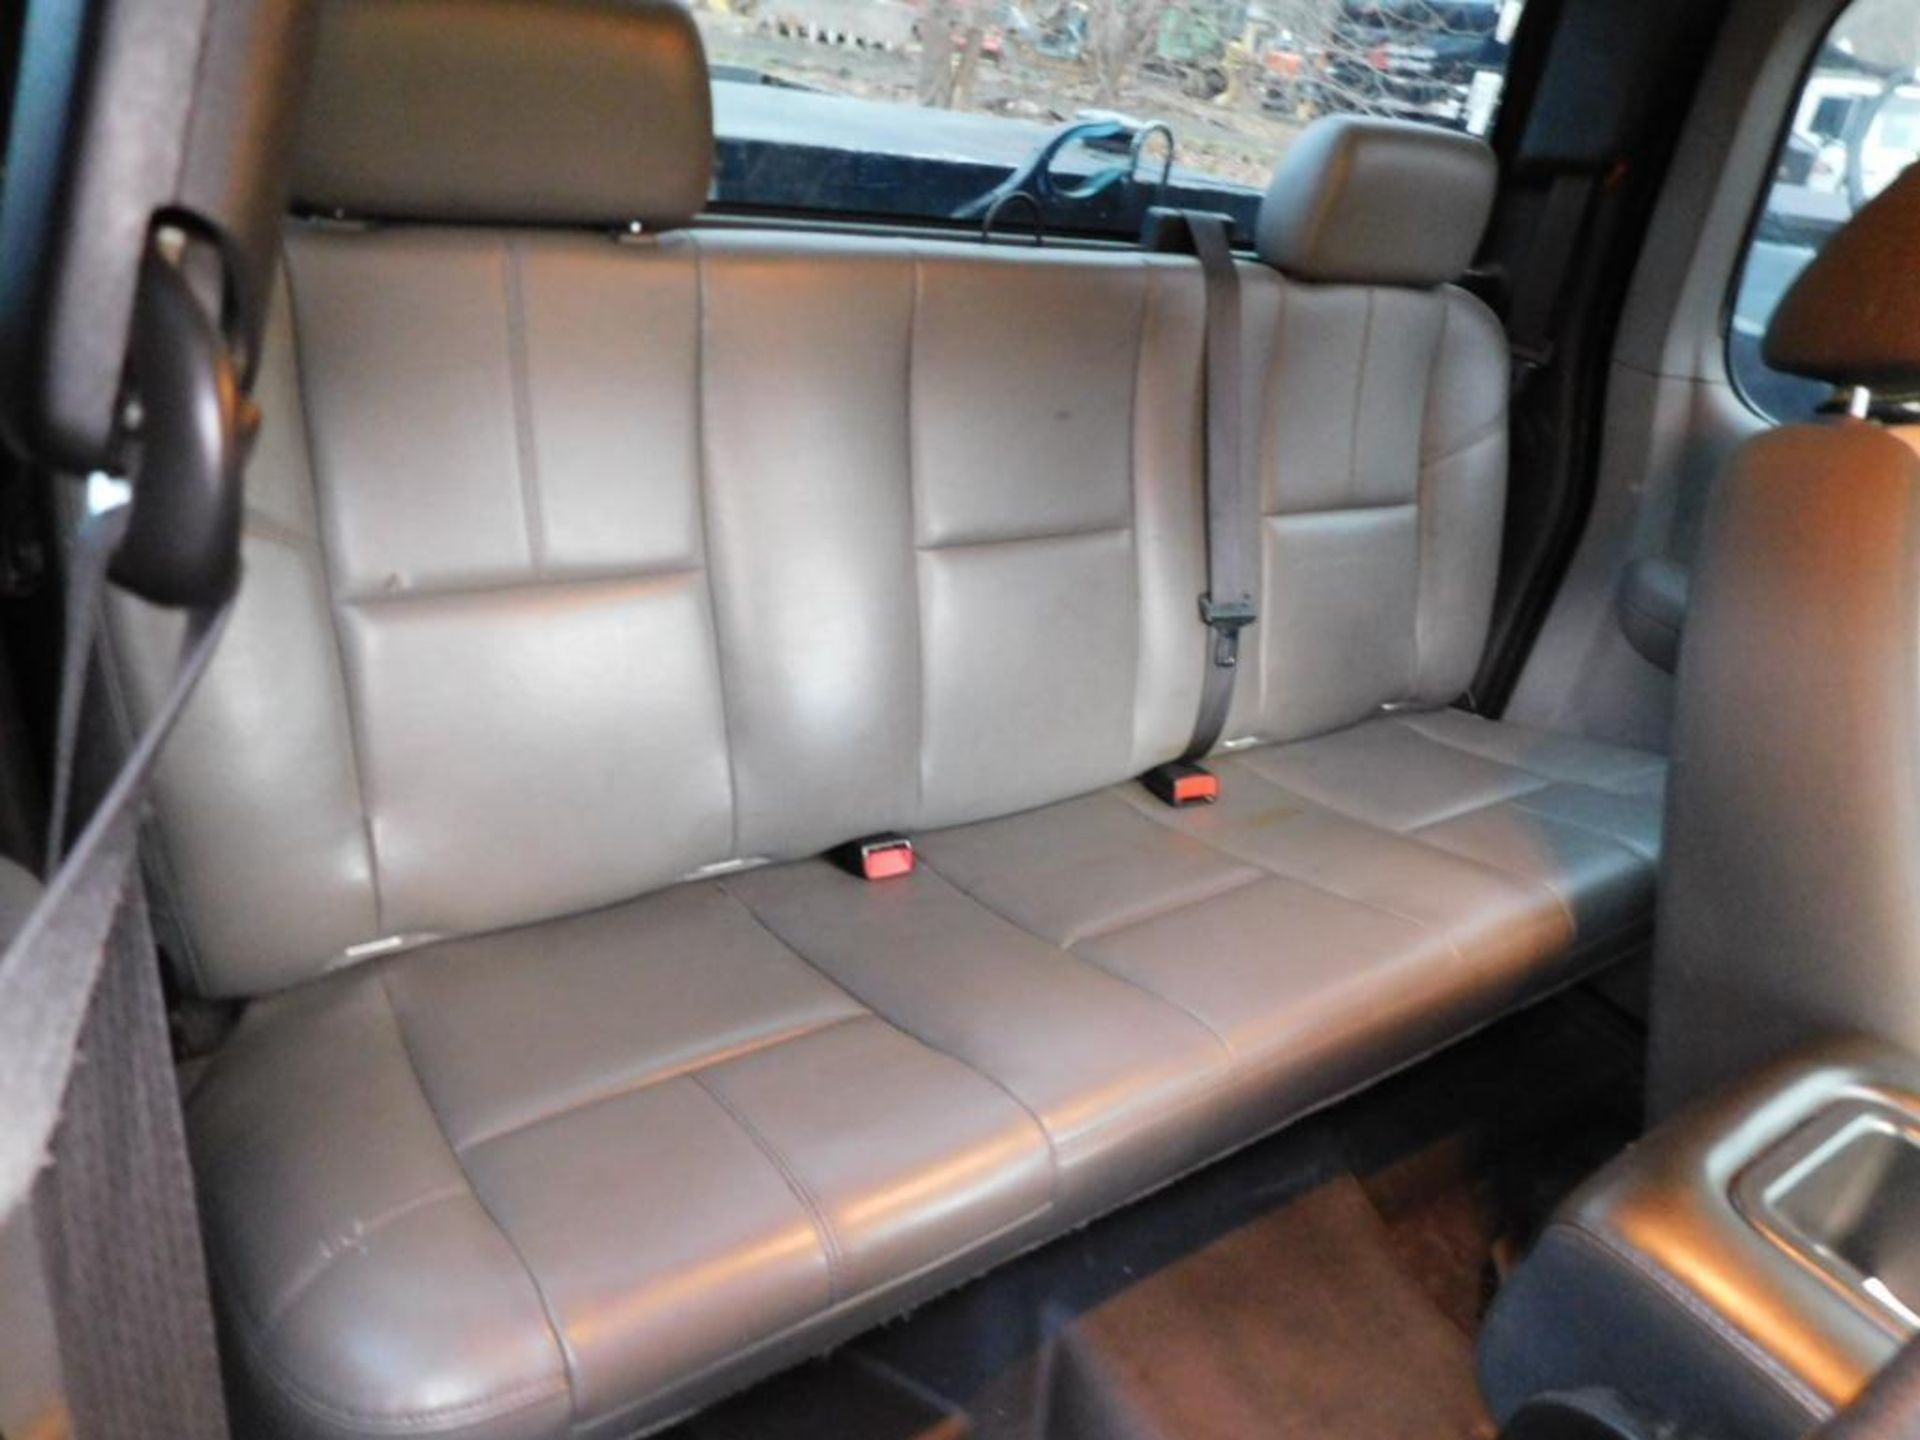 2007 Chevy Silverado Extended Cab, 2-Wheel Drive, 5.3 Liter Vortex, V8 Gasoline Motor, Auto, 6'6" Be - Image 11 of 11